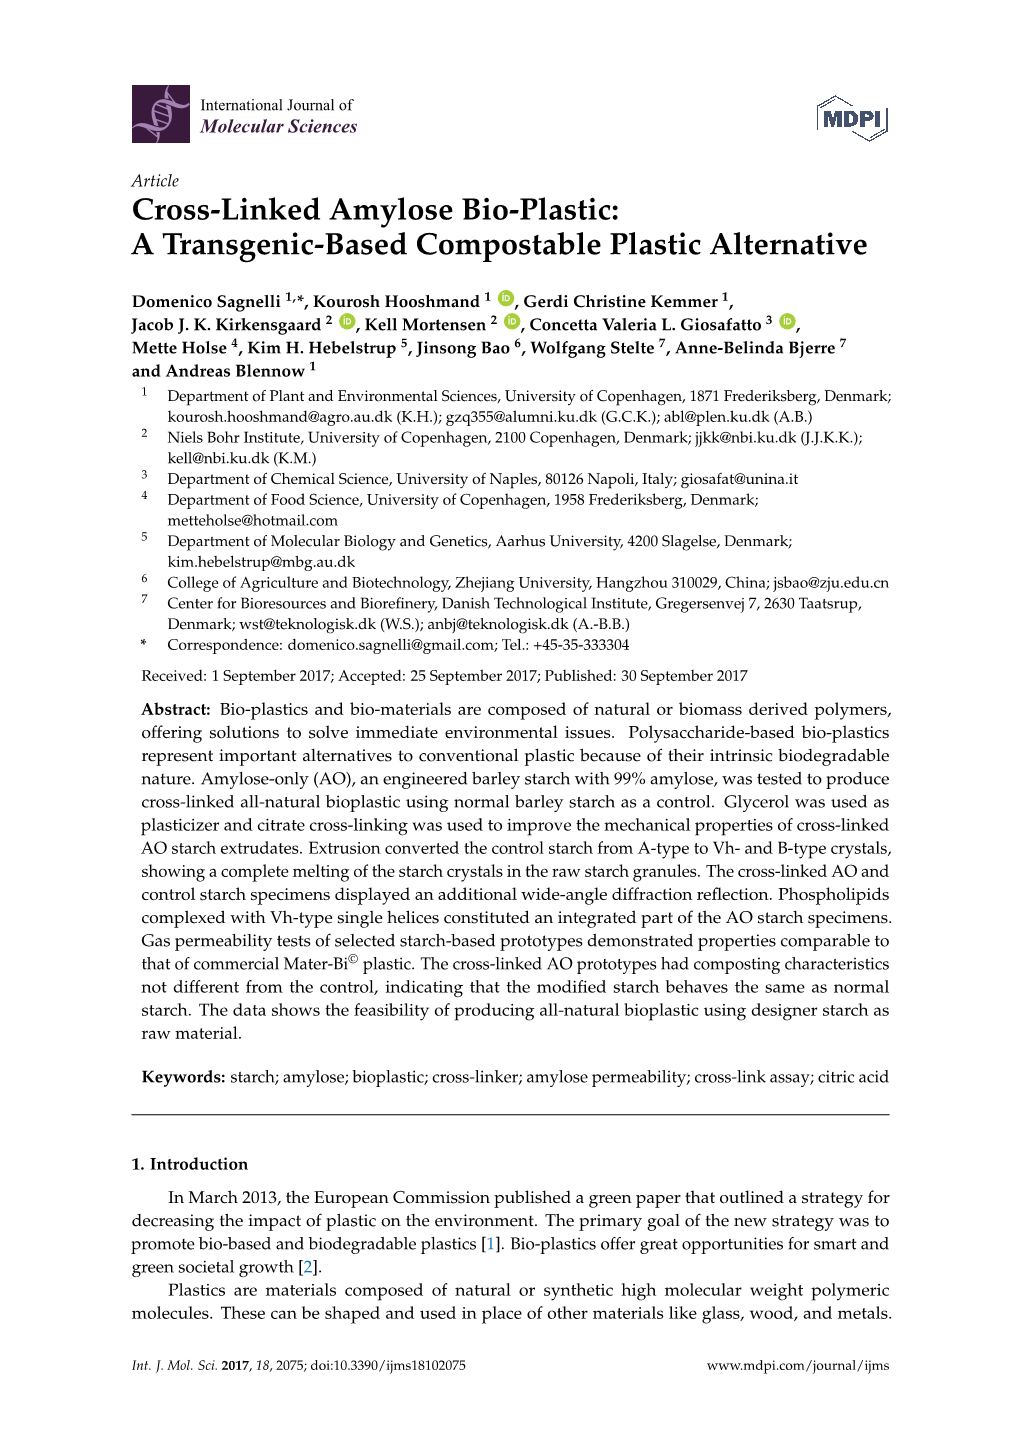 Cross-Linked Amylose Bio-Plastic: a Transgenic-Based Compostable Plastic Alternative